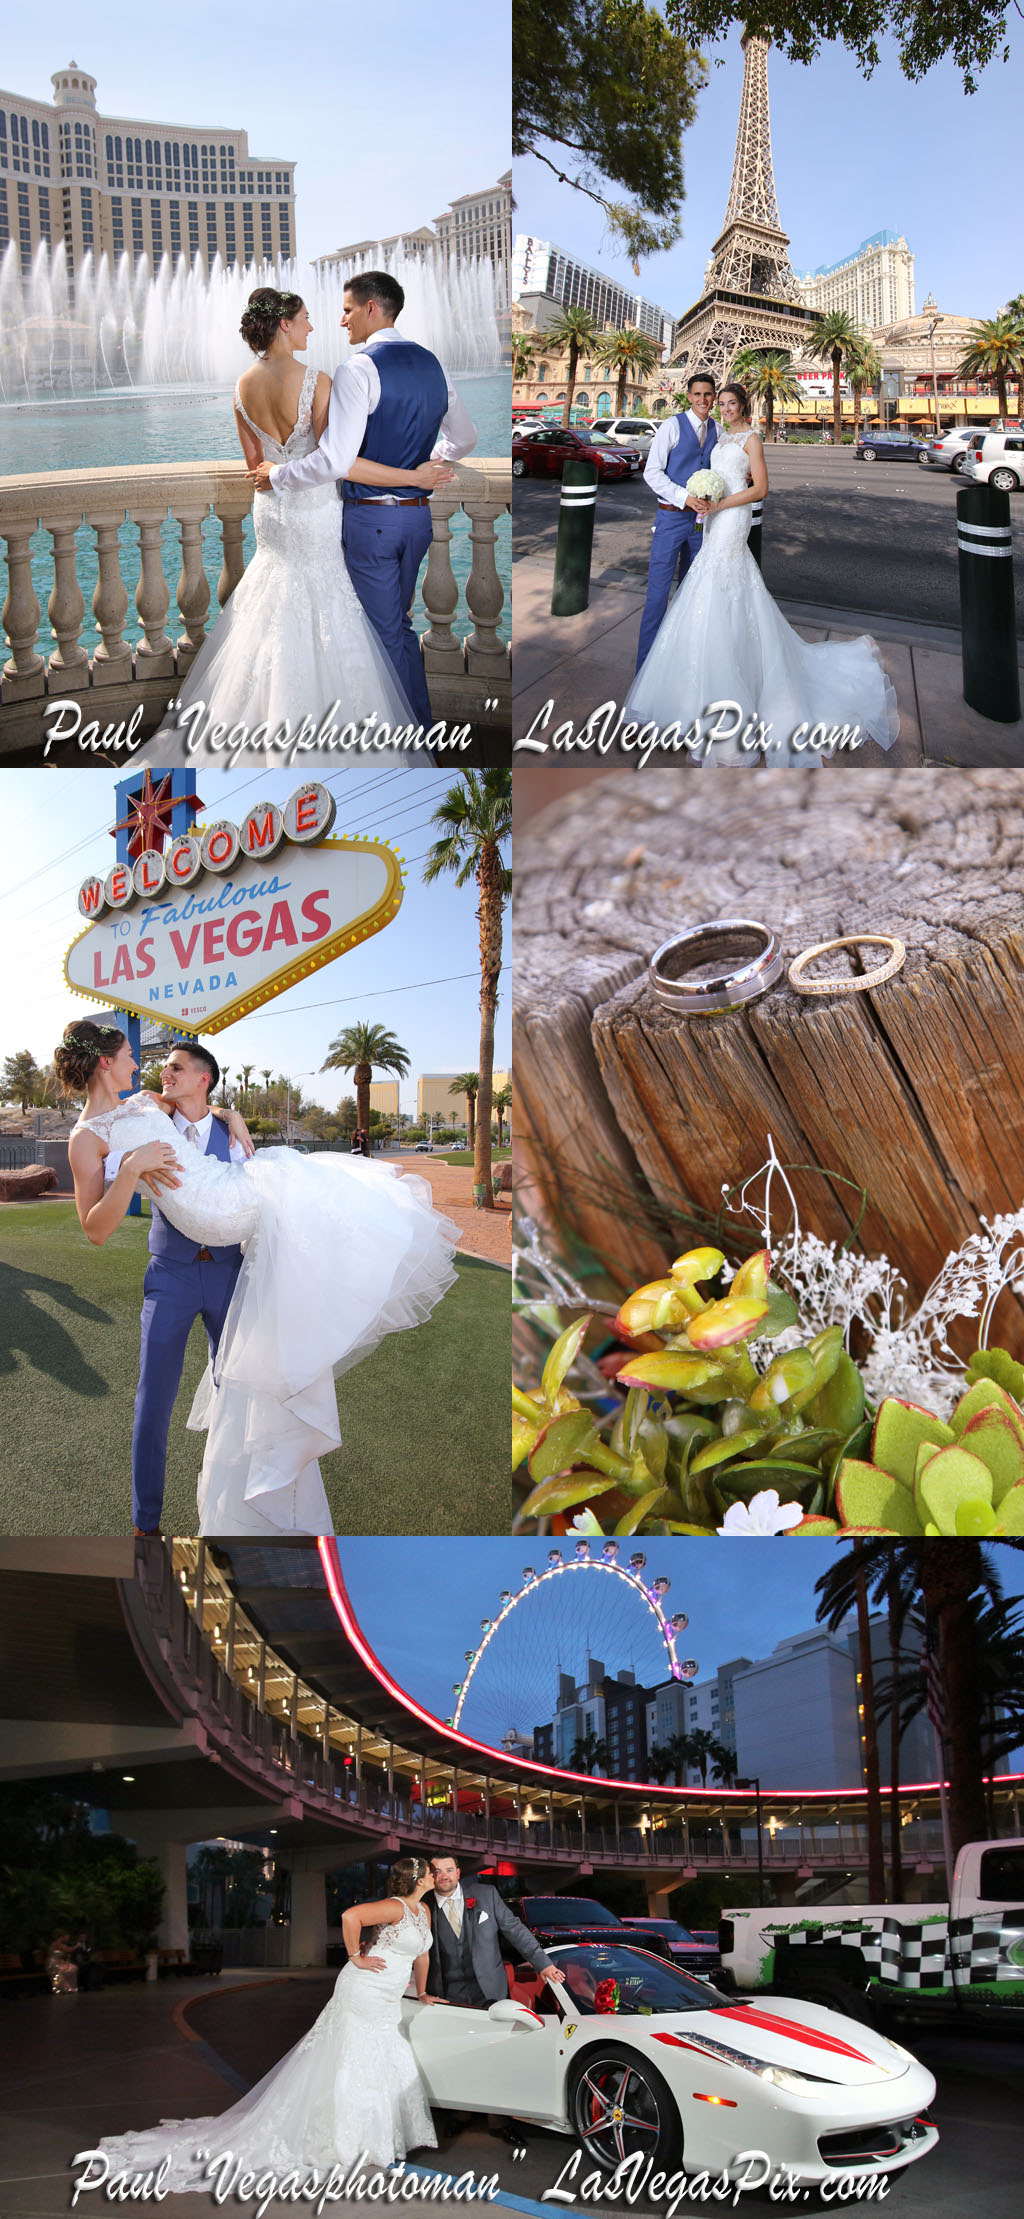 Eiffel Tower Restaurant - Venue - Las Vegas, NV - WeddingWire